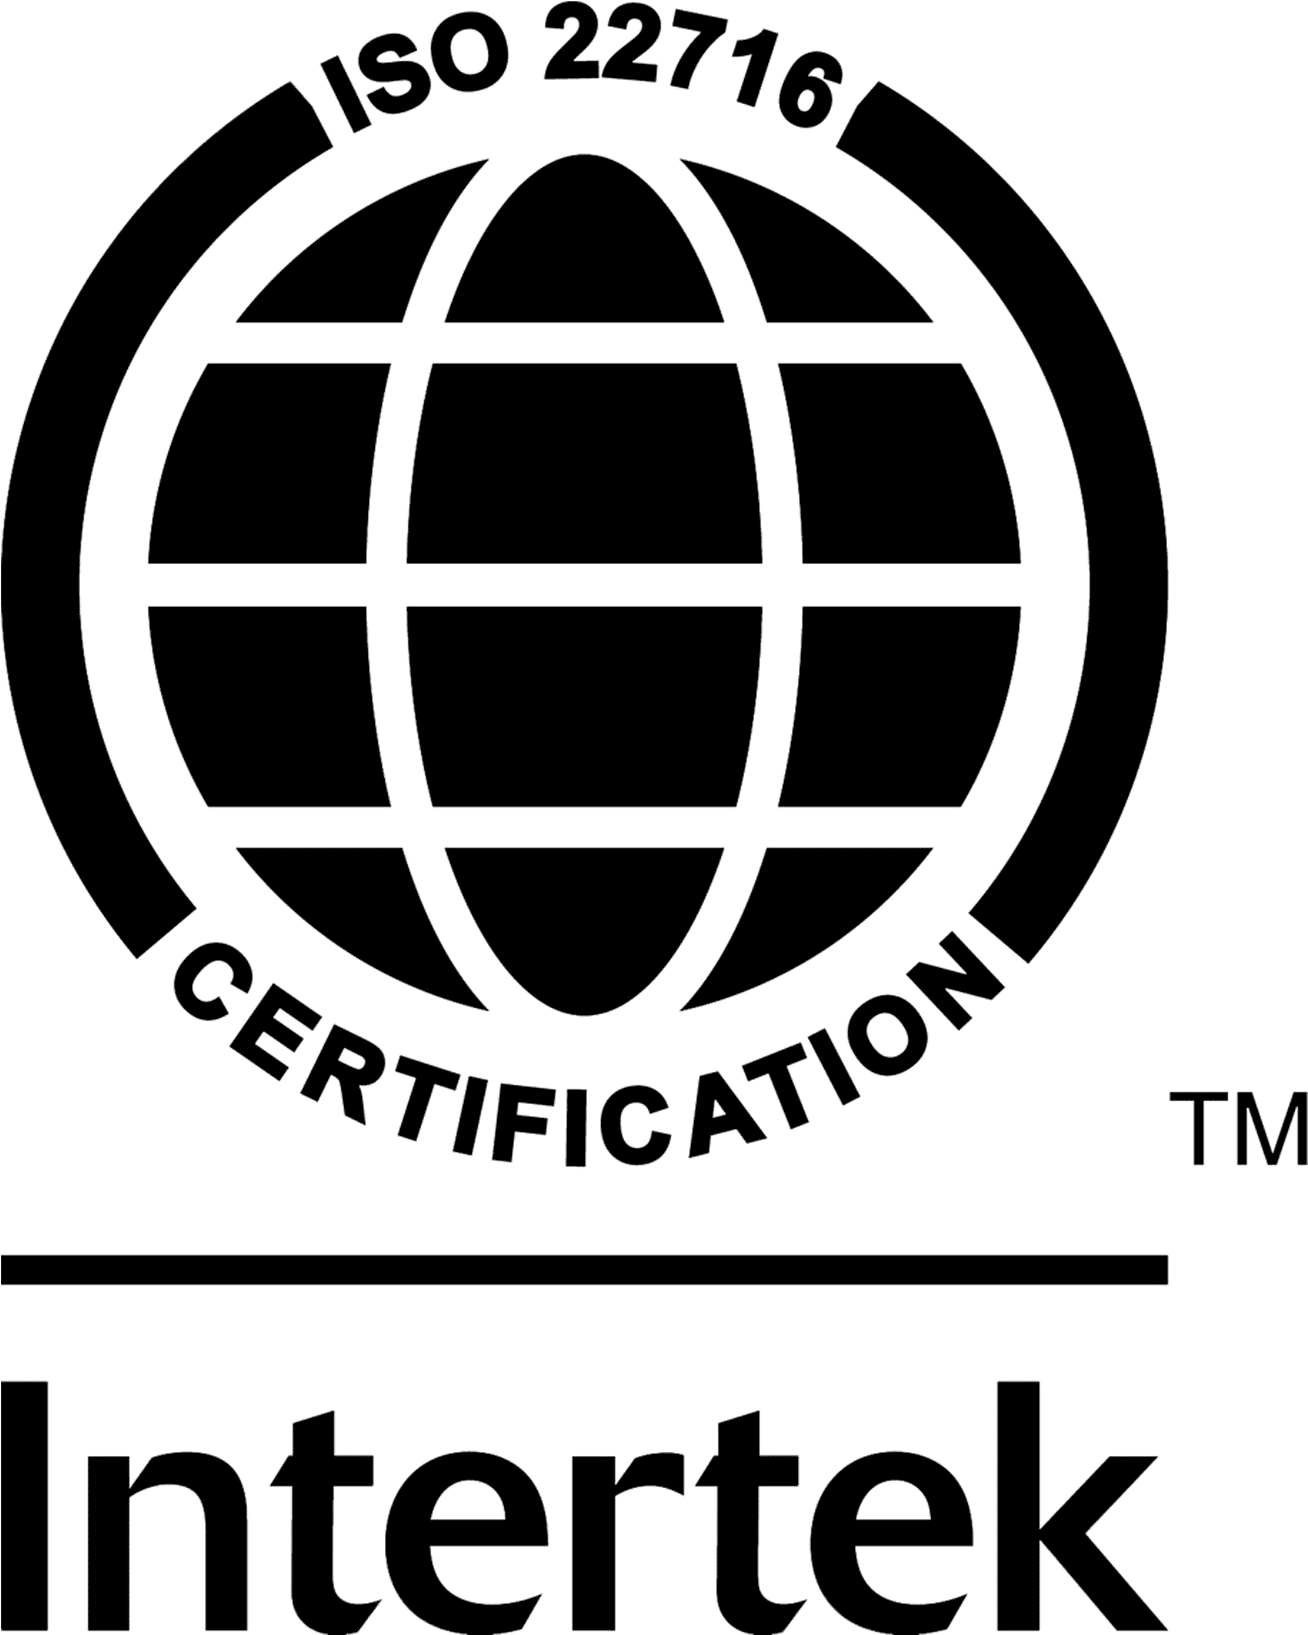 Intertek certification